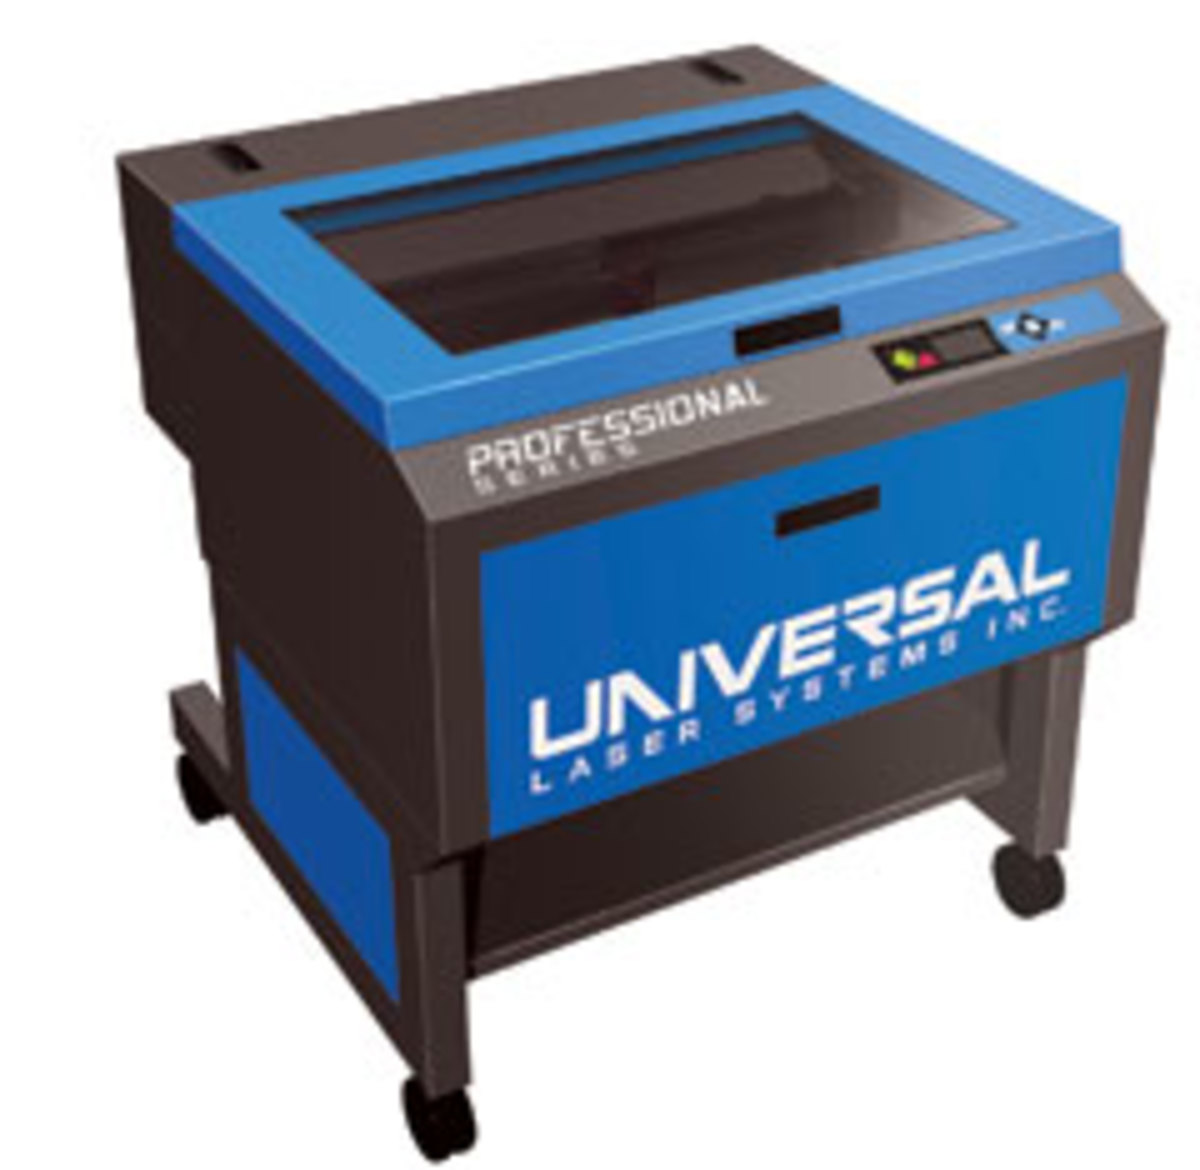 Universal Laser Systems offers a wide range of laser engravers, including desktop, freestanding and industrial models.